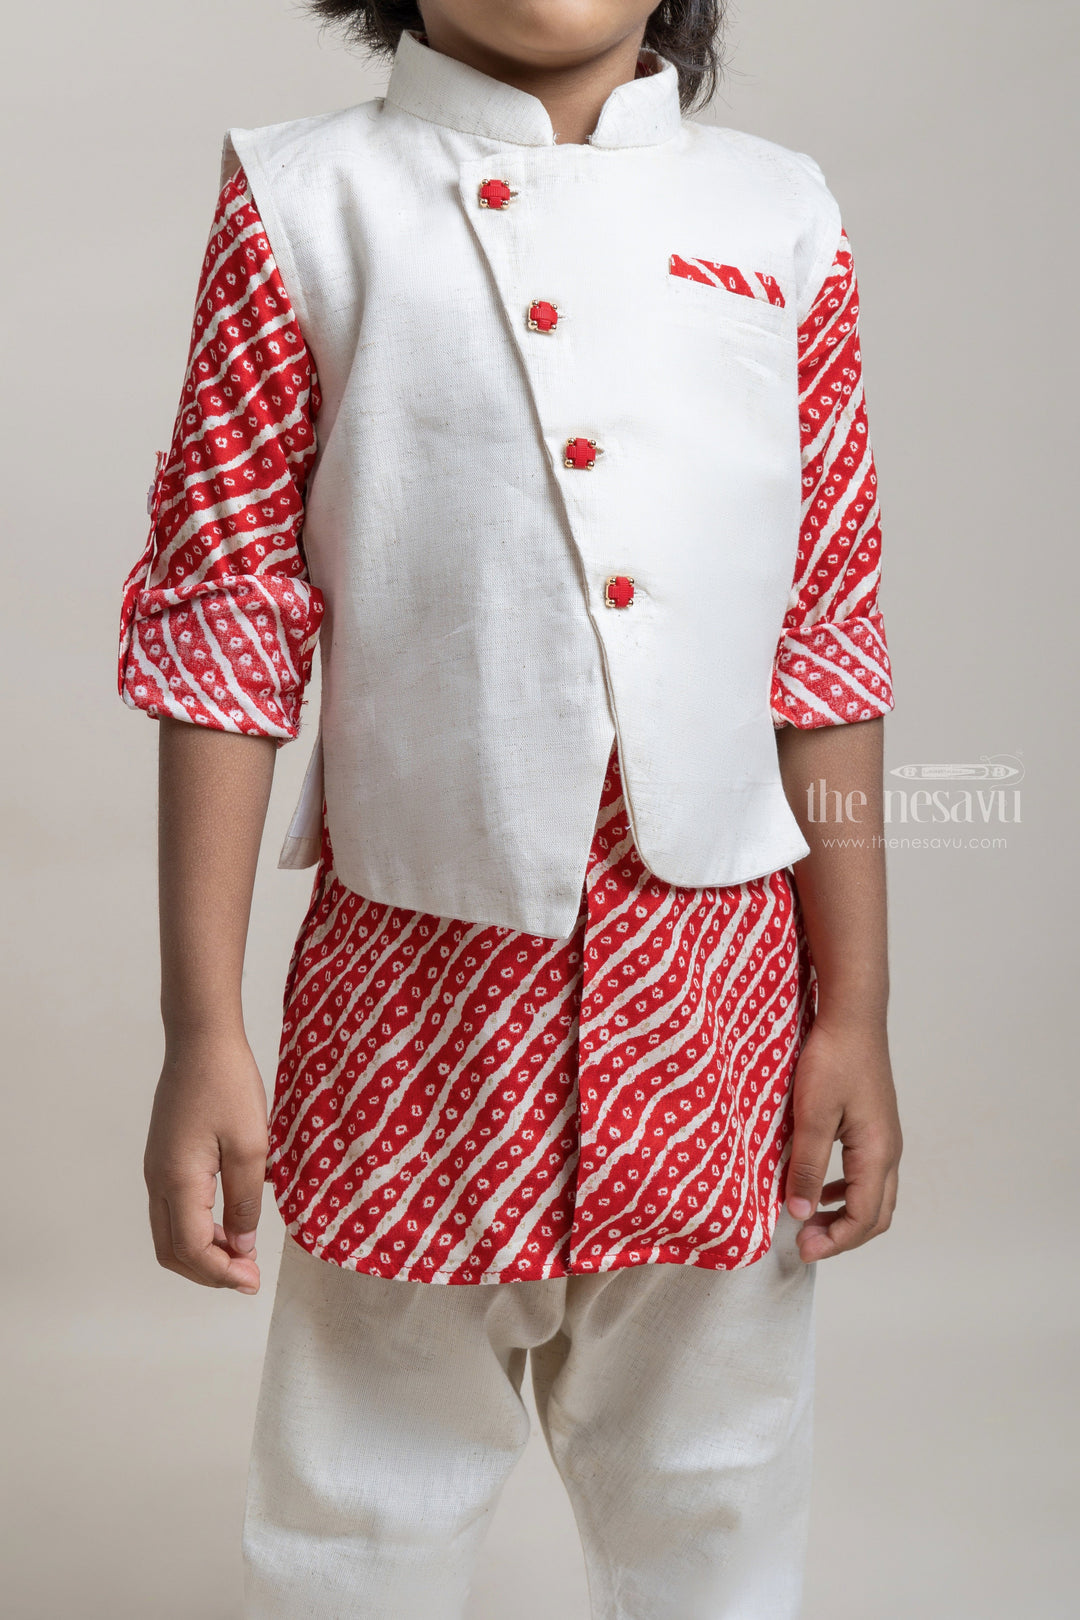 The Nesavu Boys Jacket Sets Fashionable Red Stripes Printed Kurta And Pant With Beige Over Coat For Boys Nesavu Shop the Latest Kurta Collection for Boys | Fashionable Kurta Collection | The Nesavu